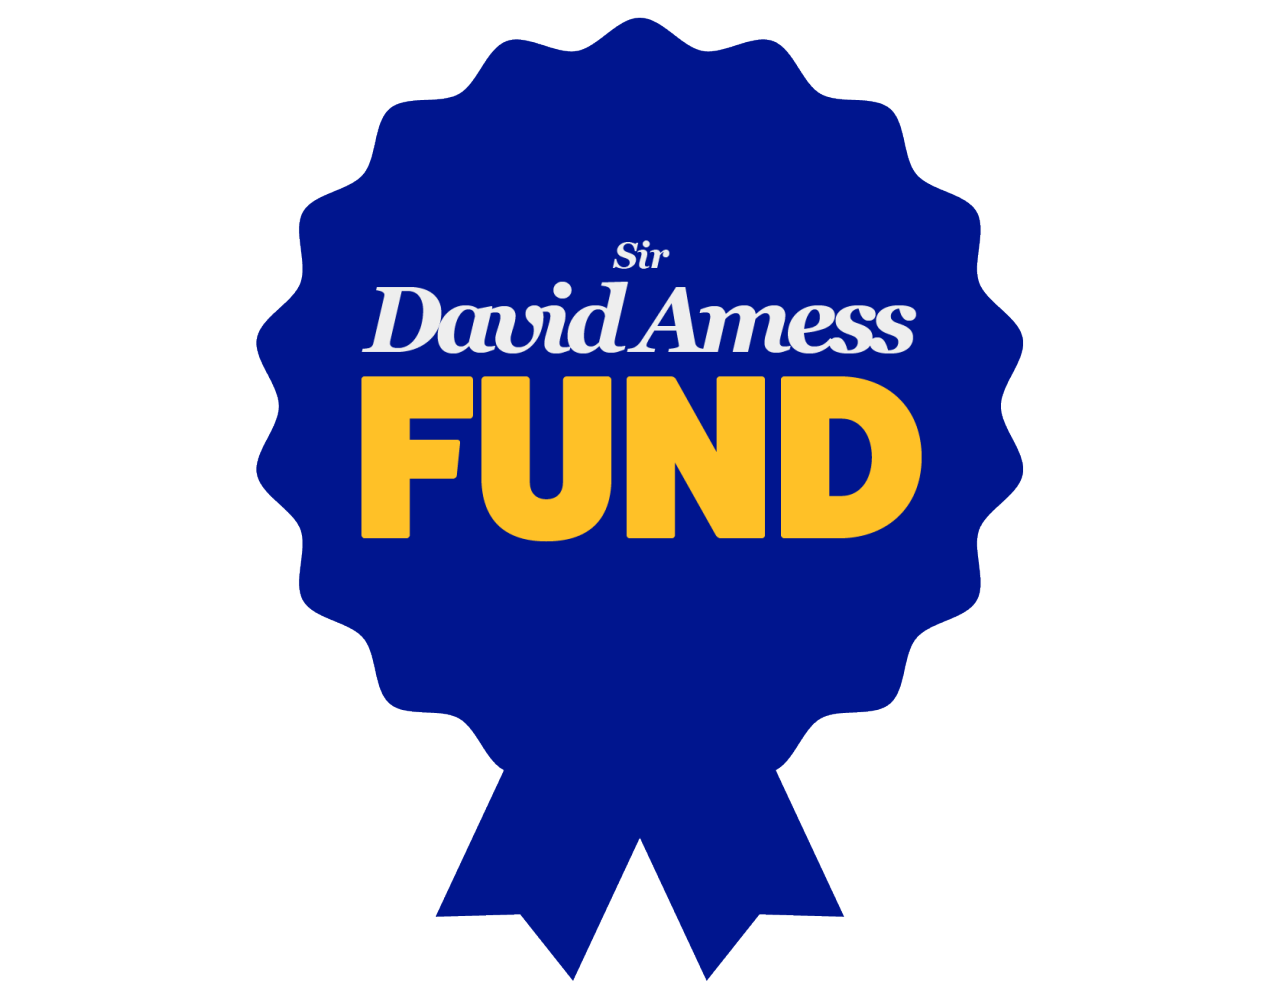 The Sir David Amess Fund